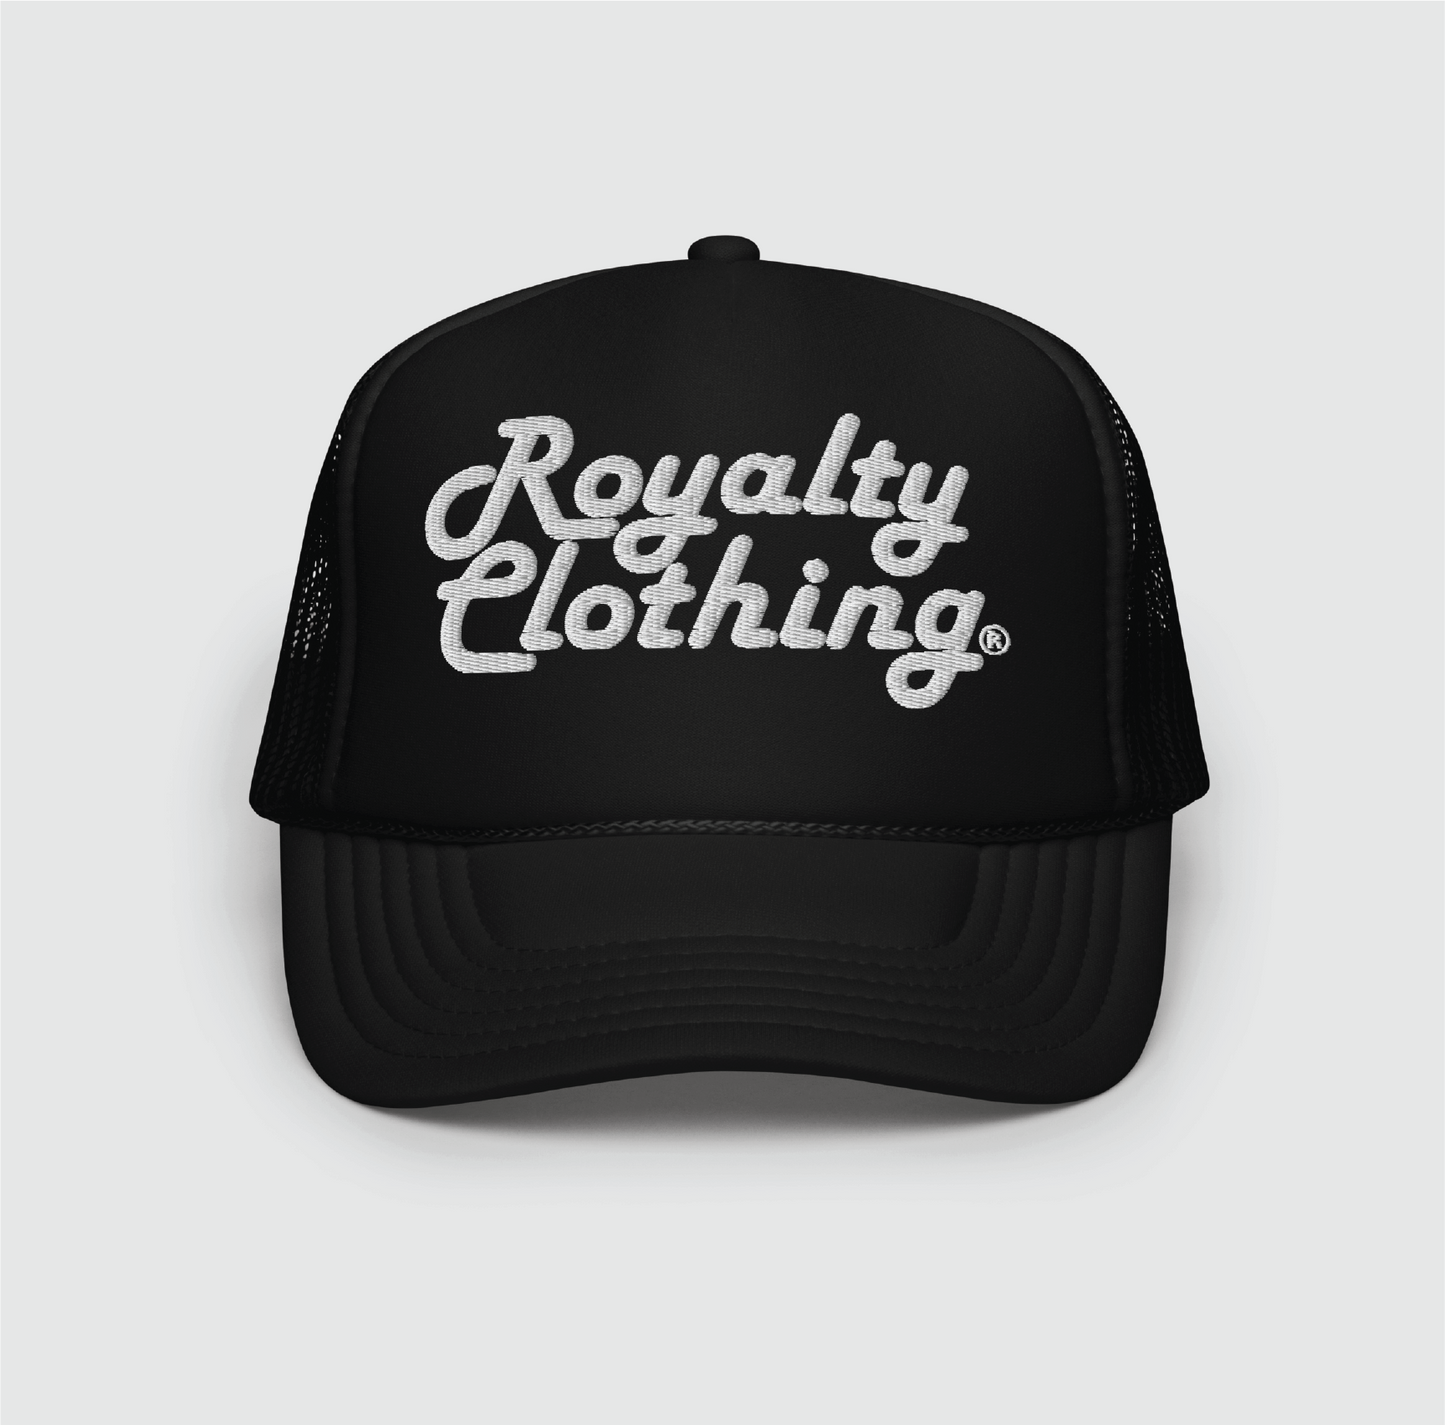 Royalty Clothing Trucker Hat